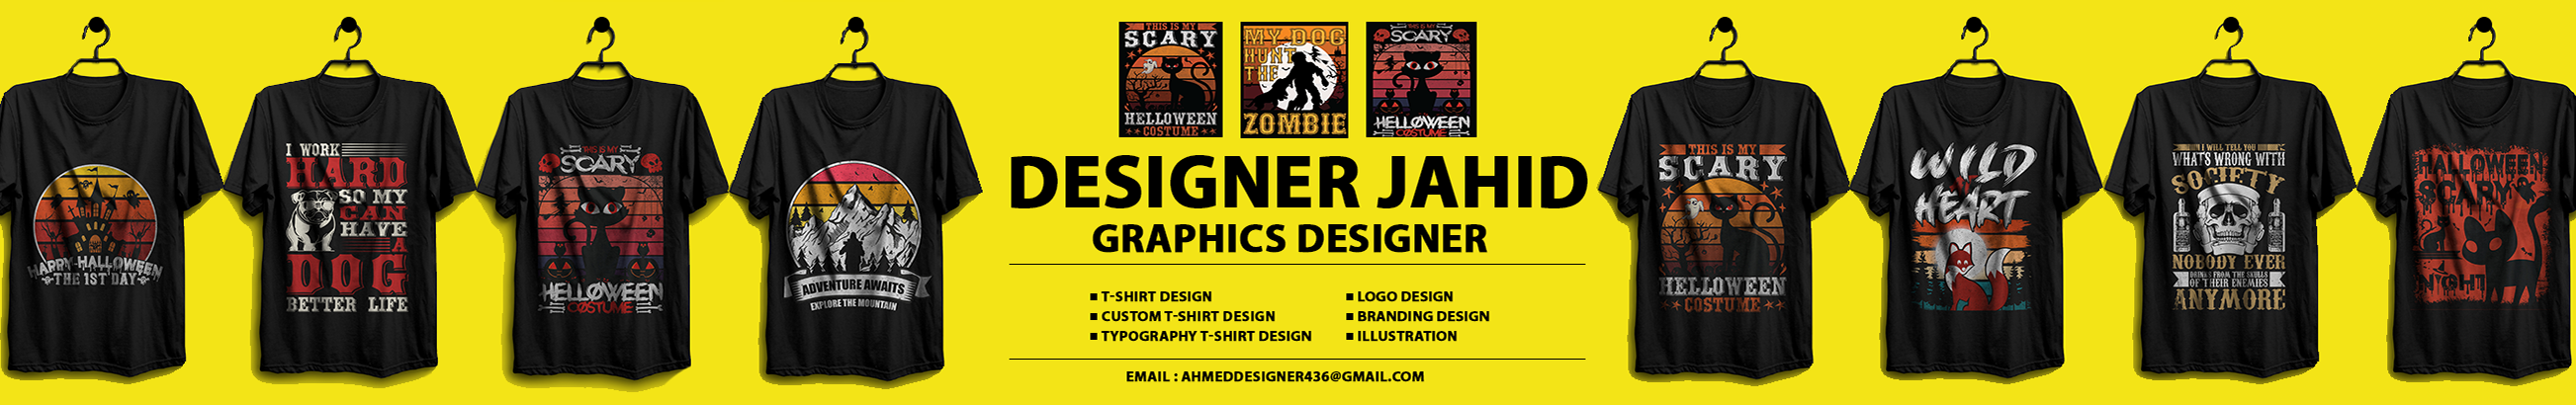 Banner de perfil de Designer Jahid